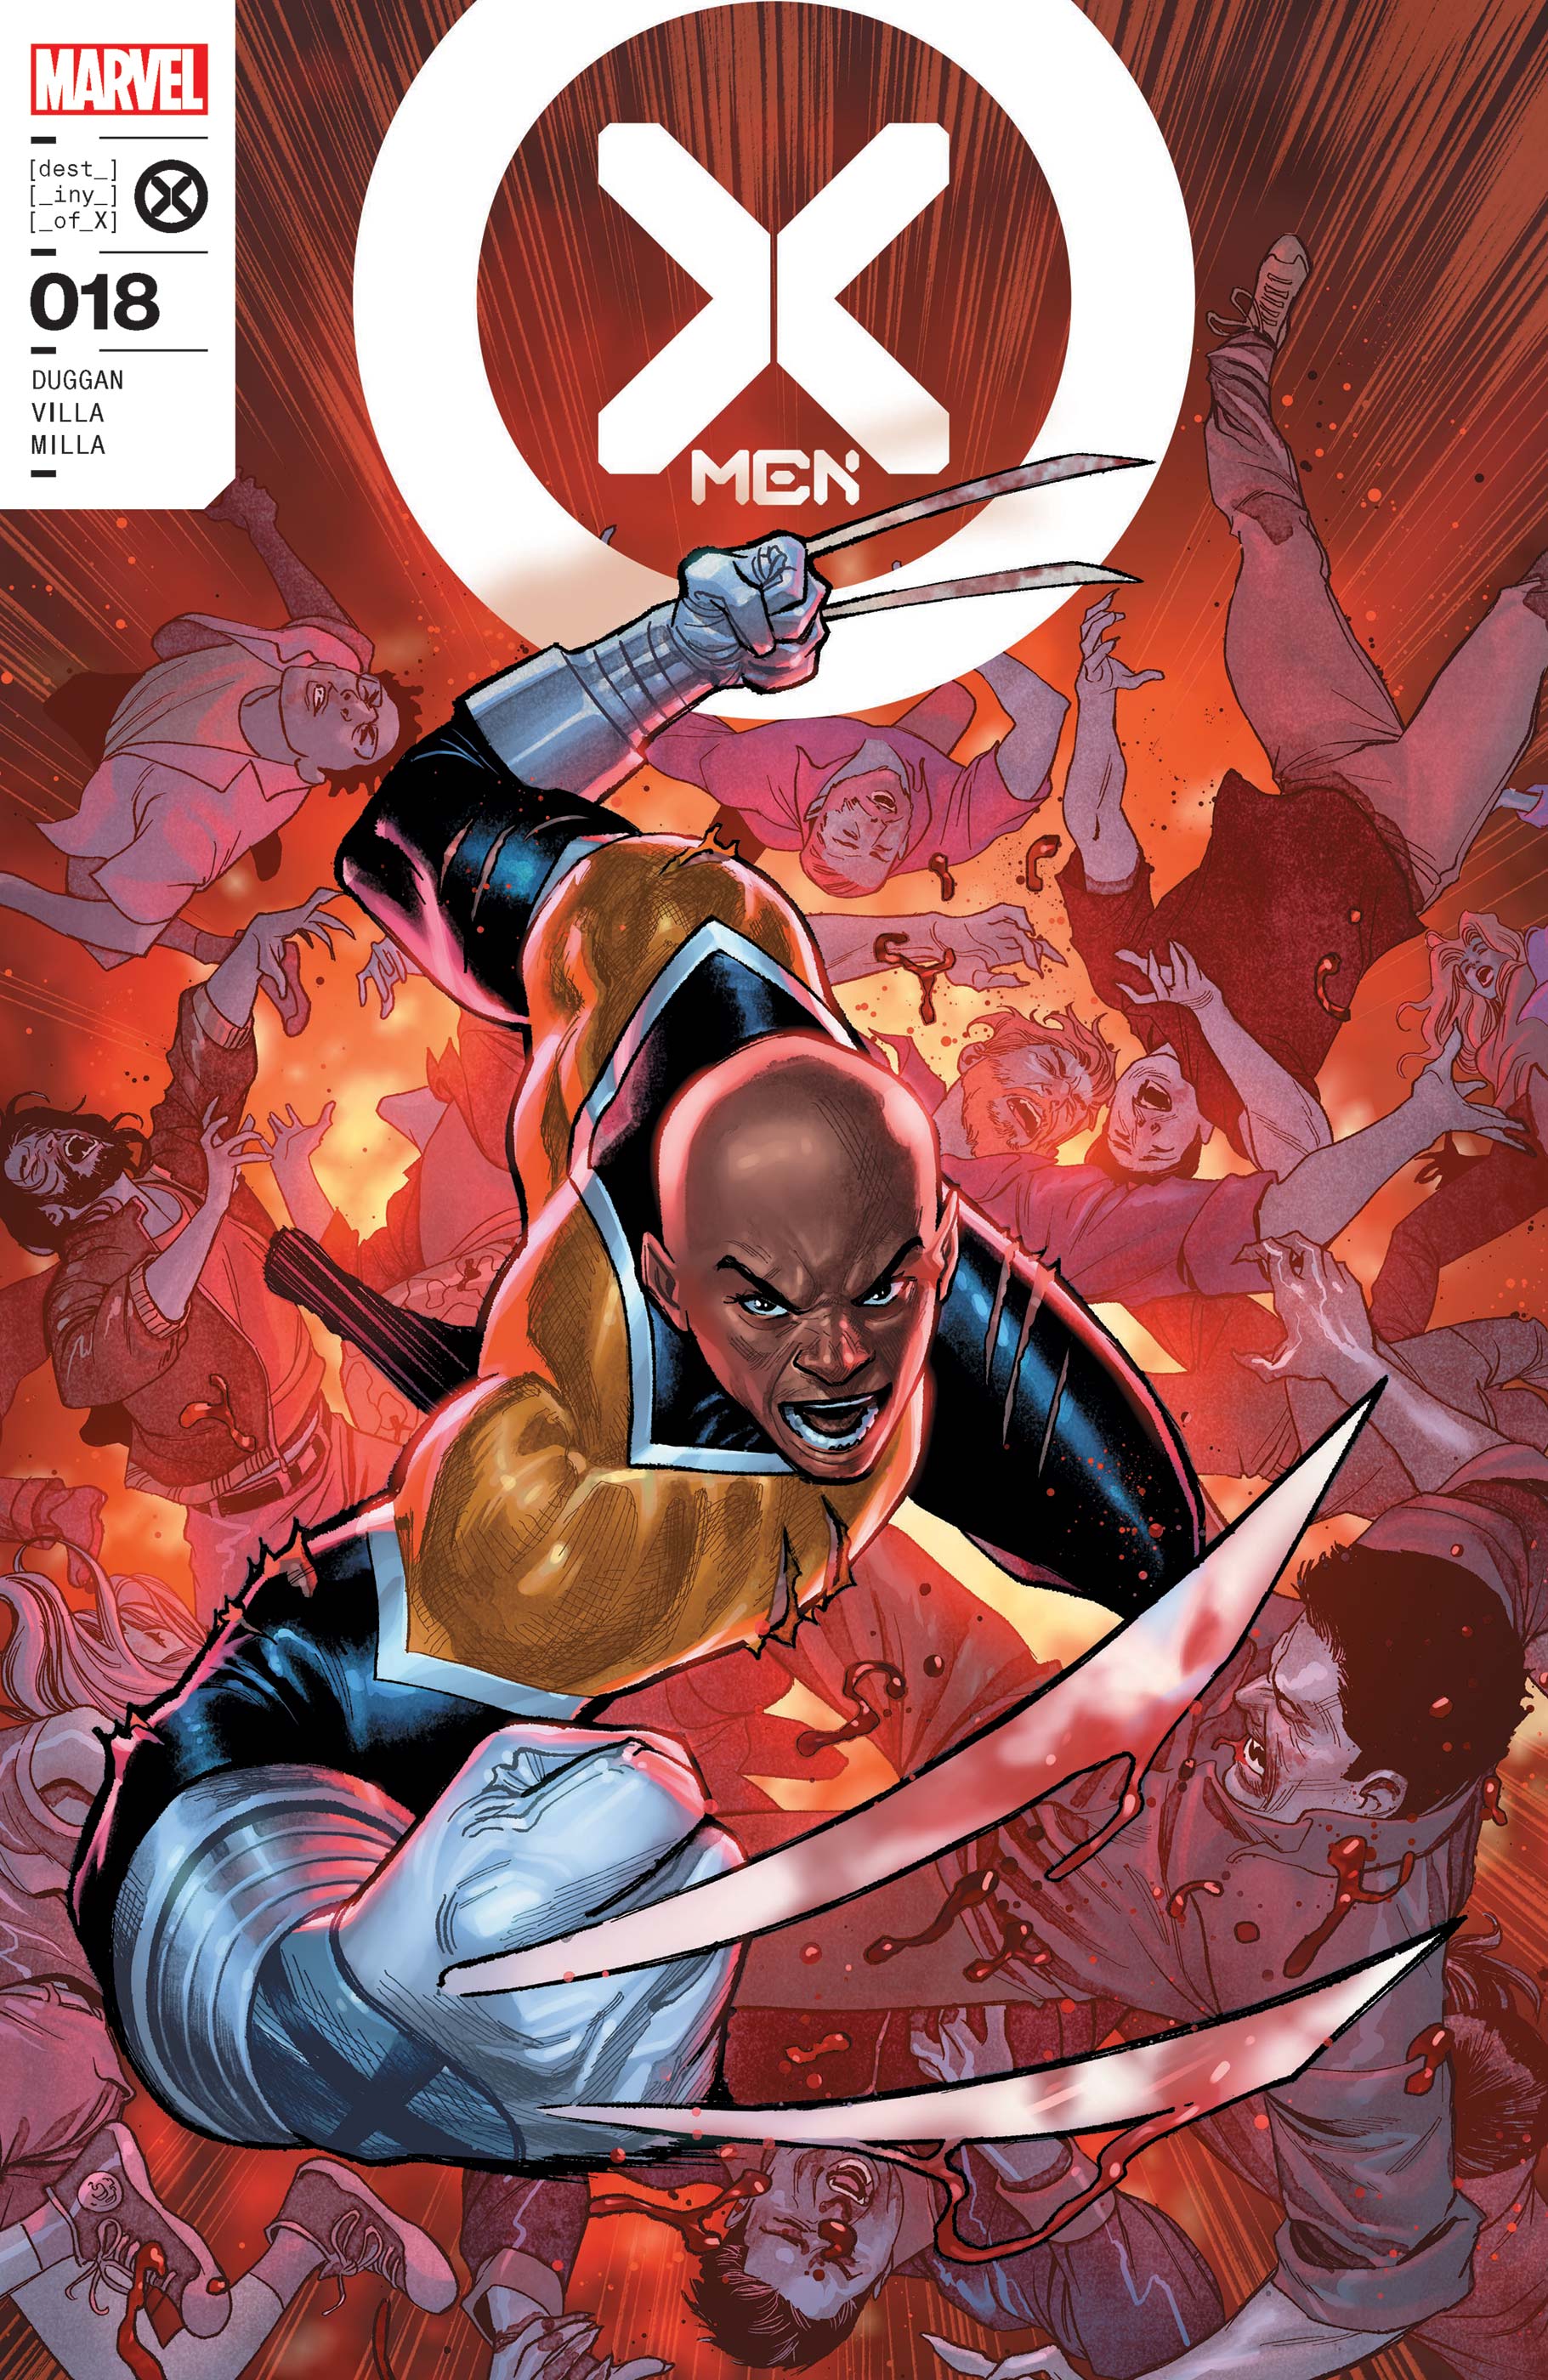 X-Men (2021) #18